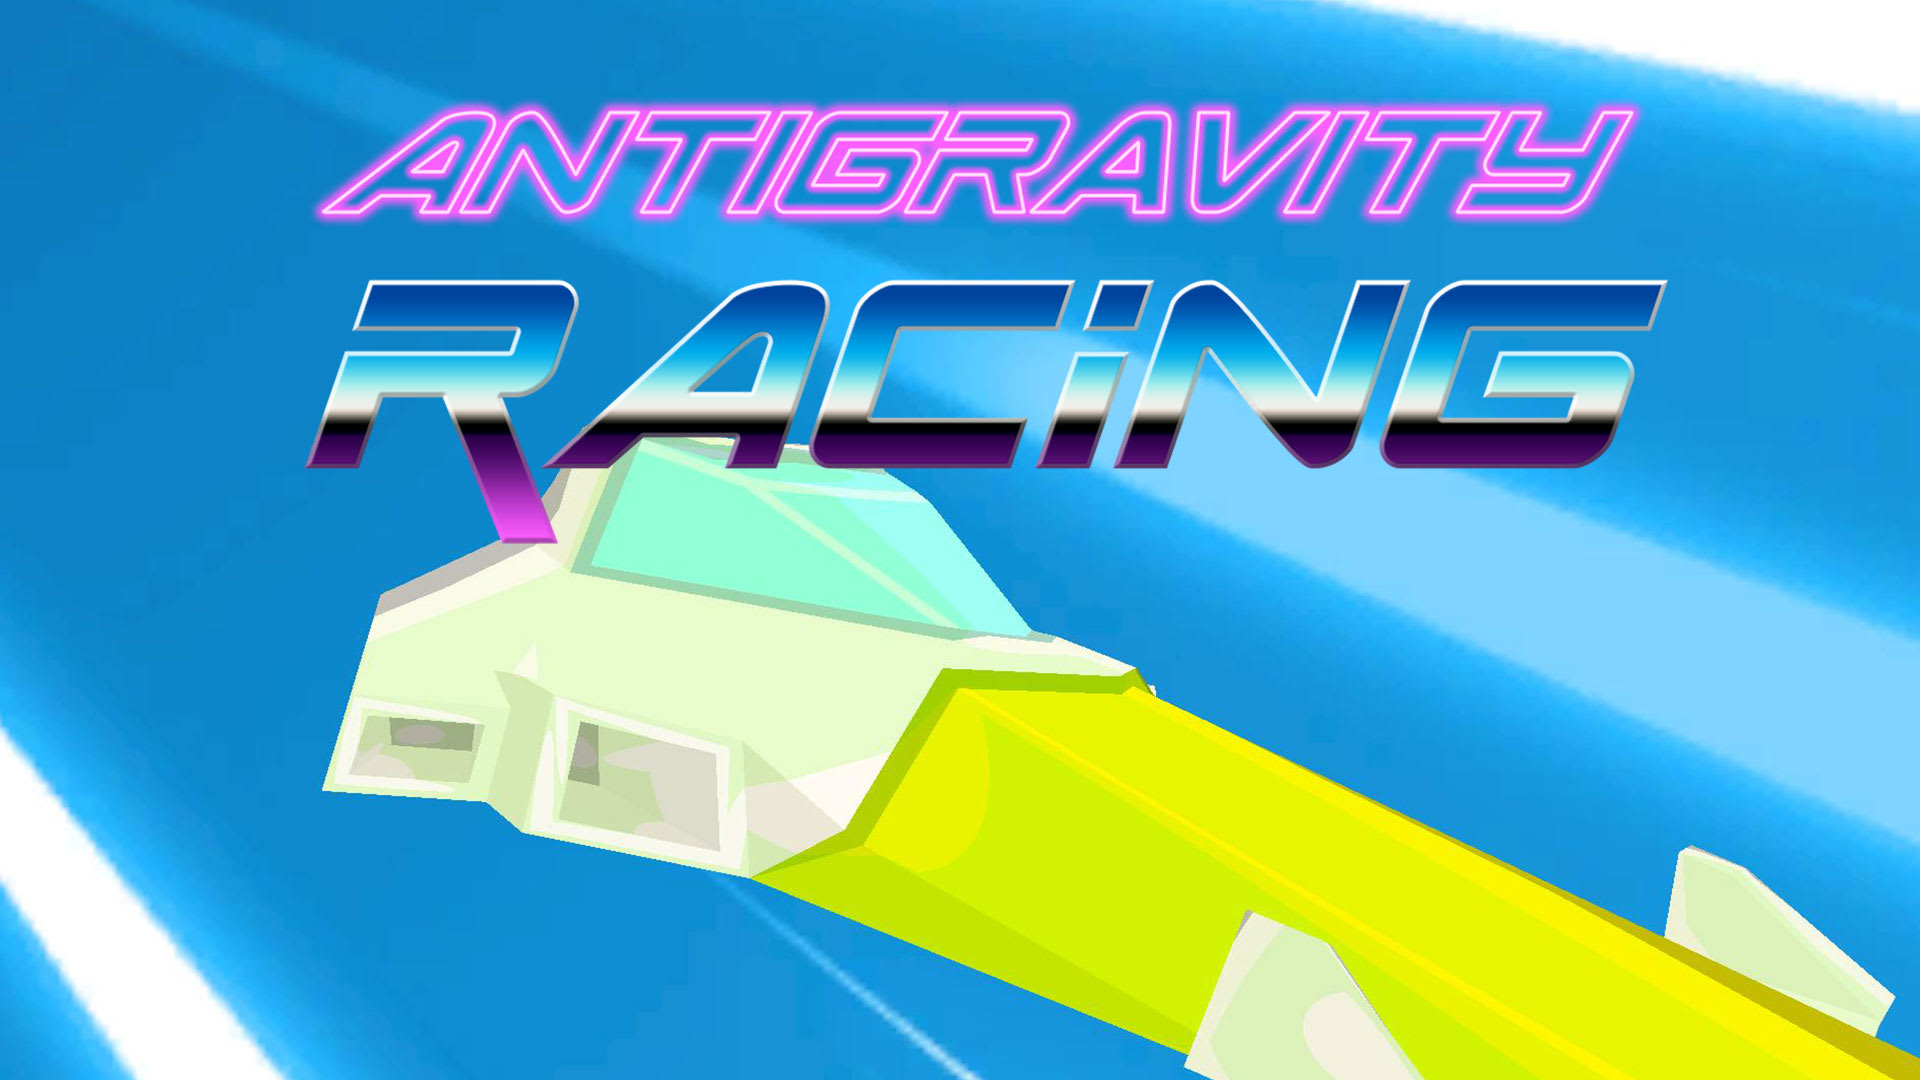 Antigravity Racing